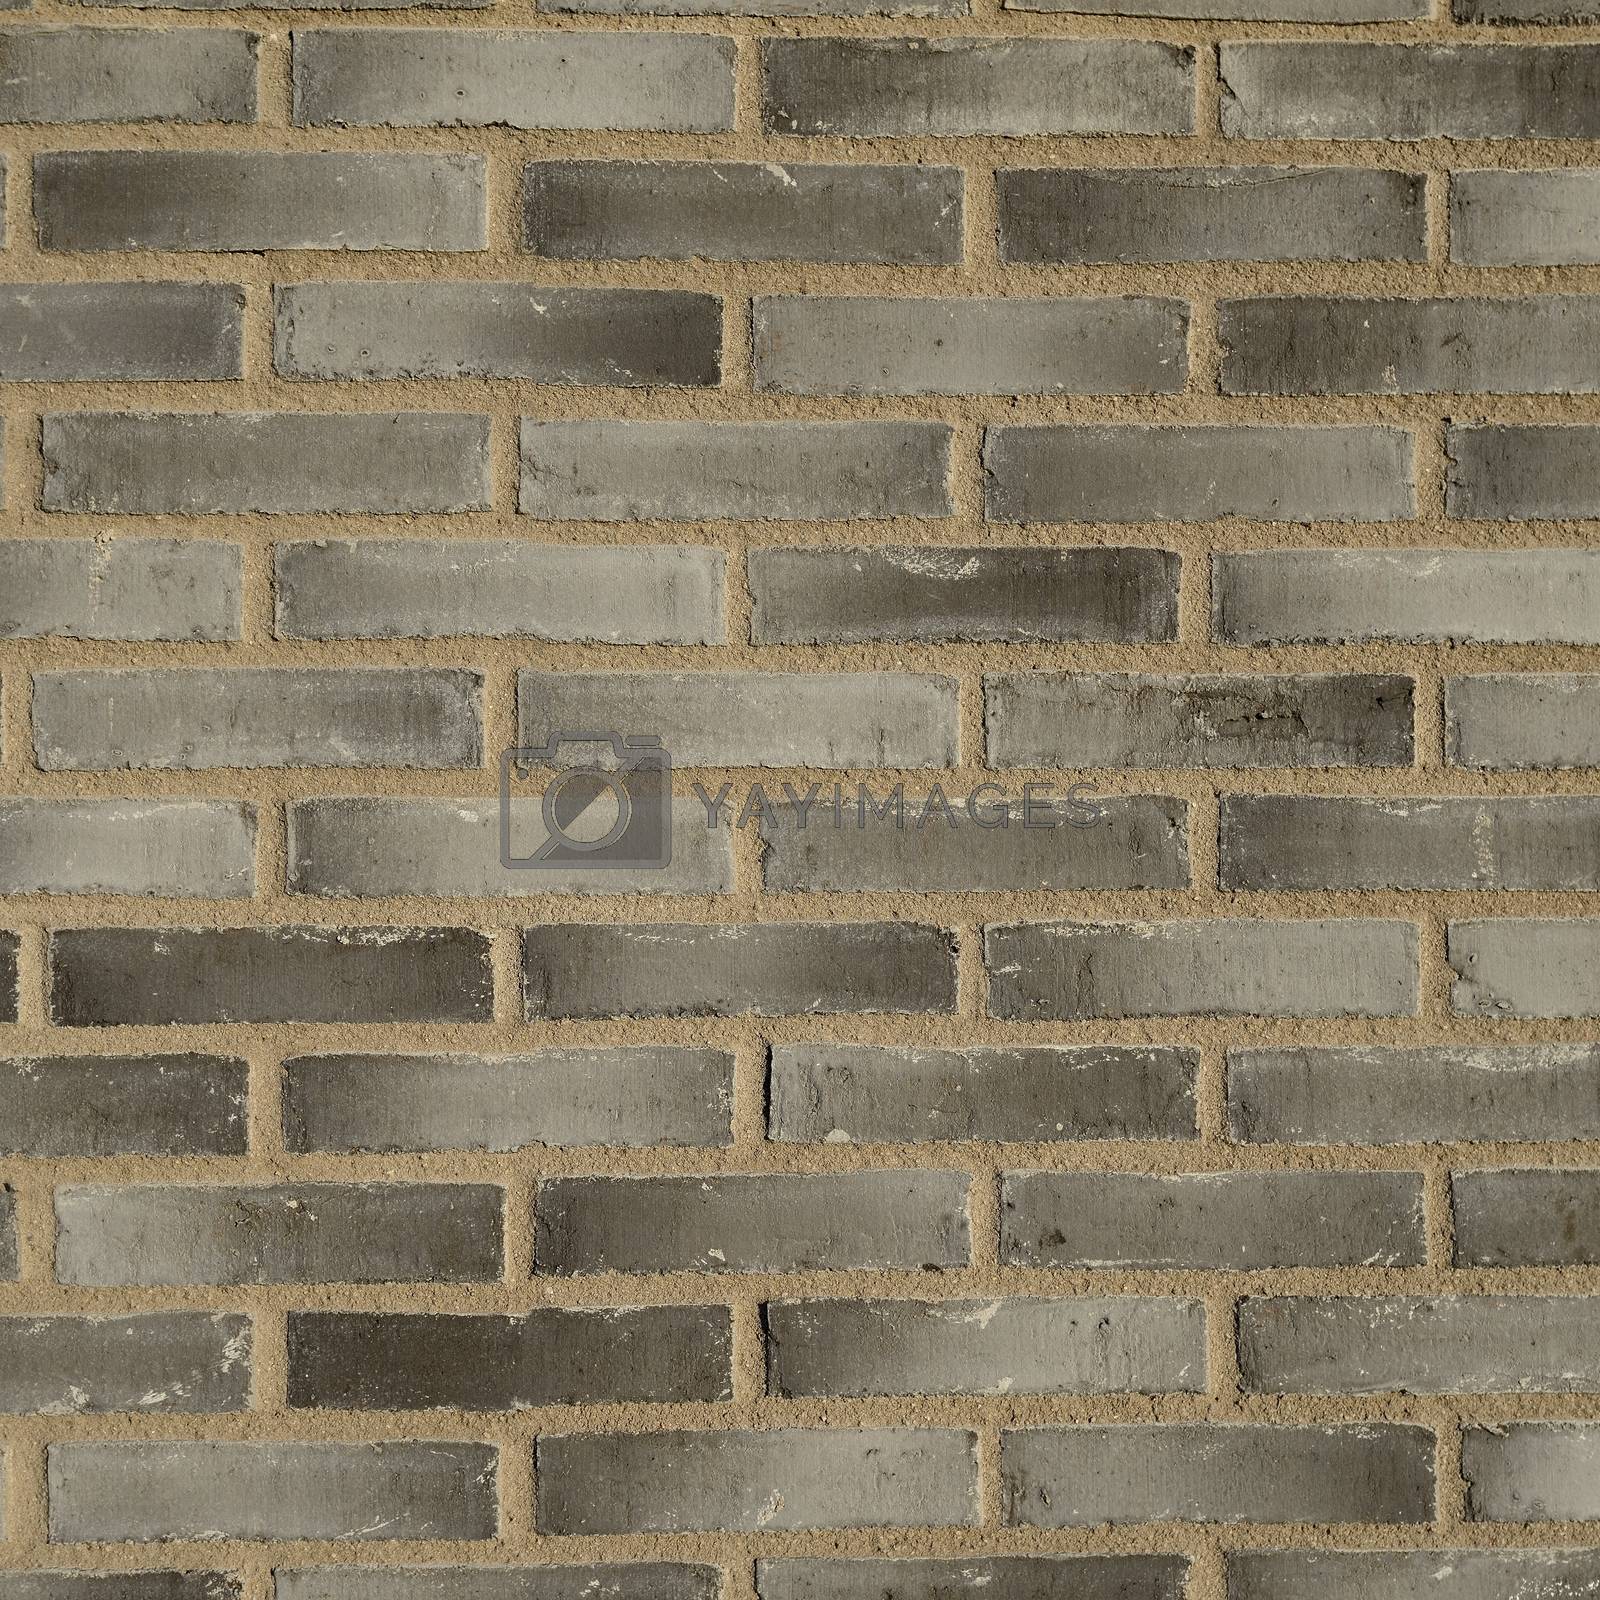 Royalty free image of Brick wall by a40757